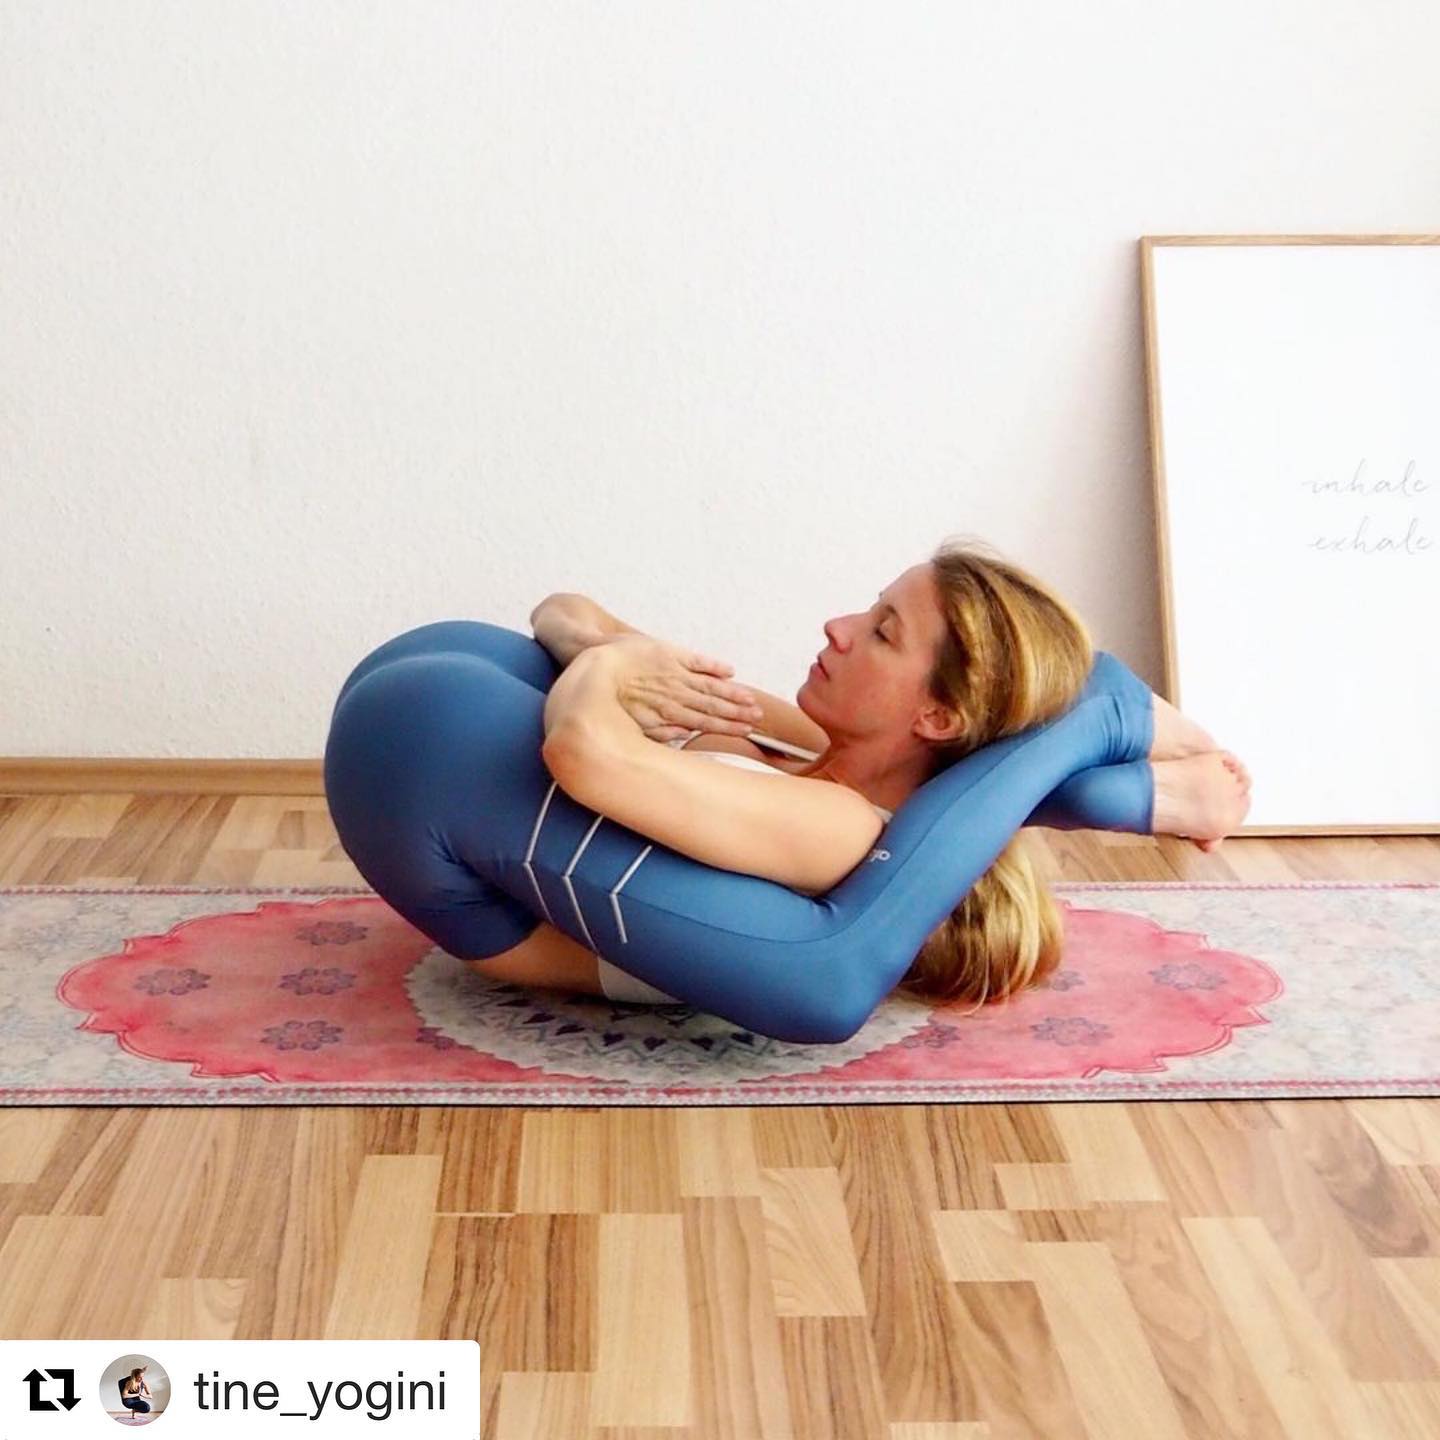 15 Jaw-Dropping Advanced Yoga Poses For Seasoned Yogis - YOGA PRACTICE